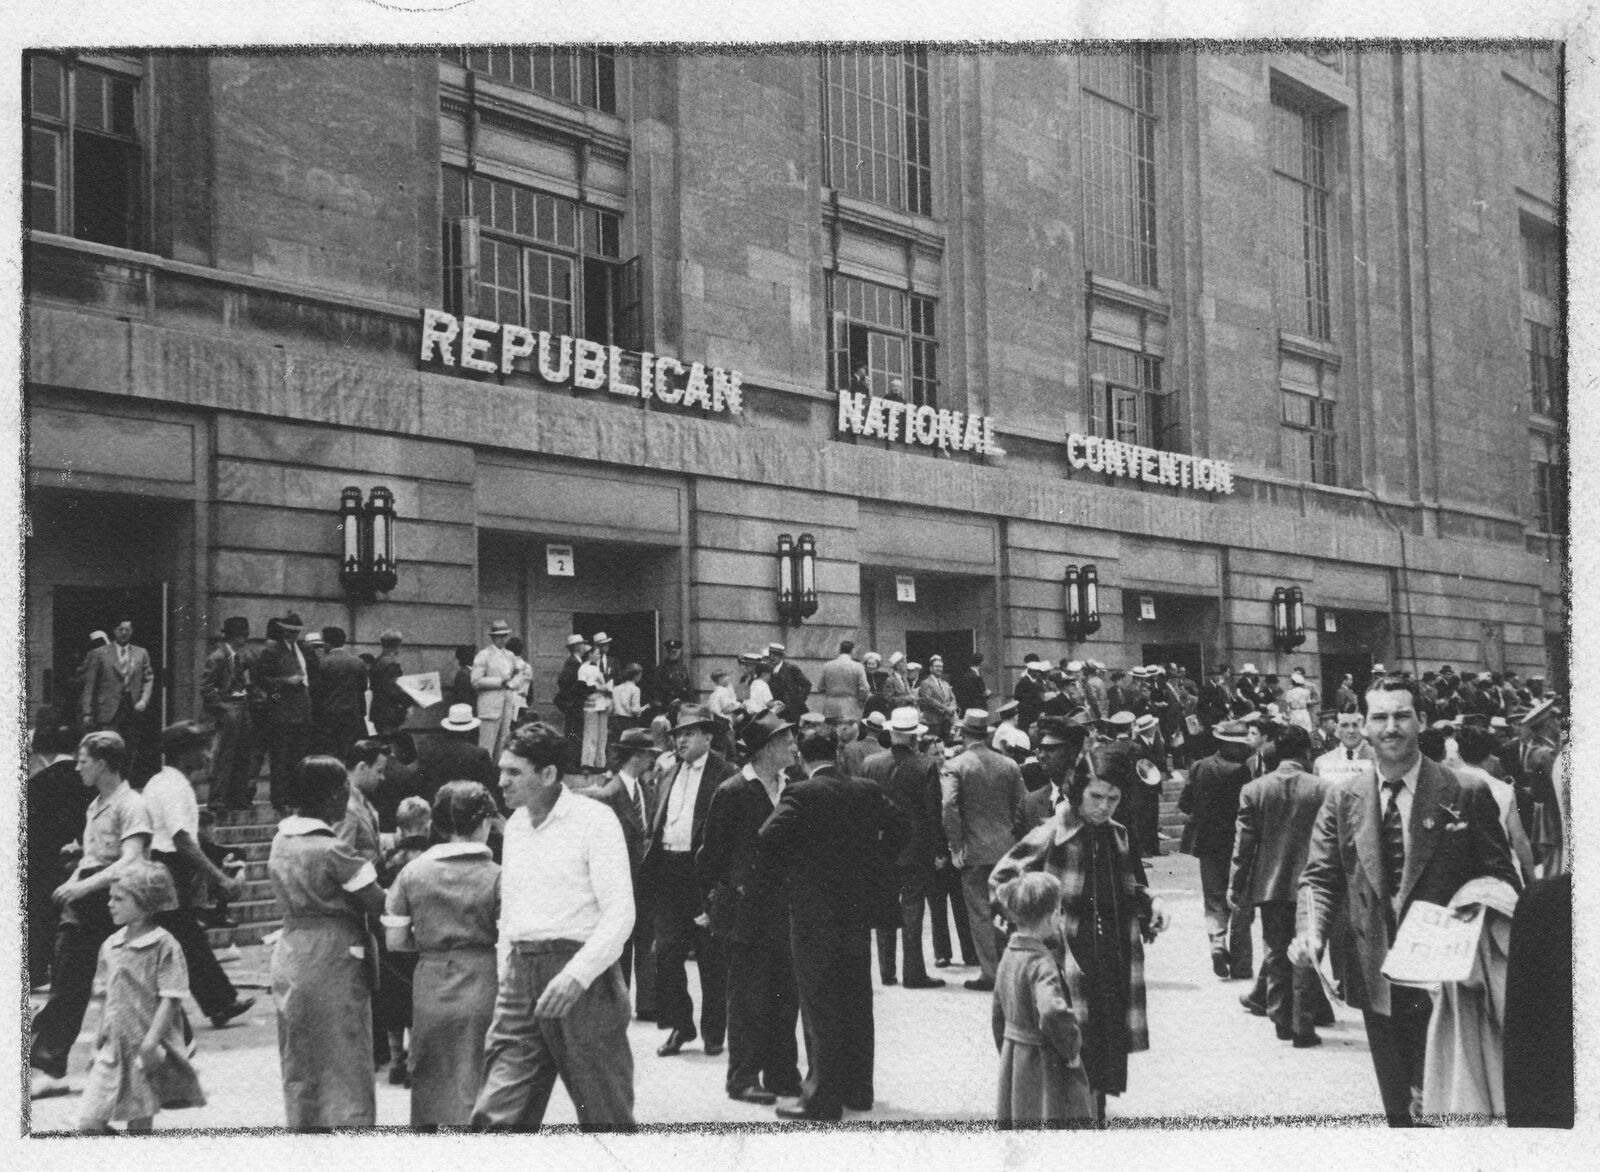 ORIGINAL 1940 PHOTO - SITE OF REPUBLICAN NATIONAL CONVENTION - PHILADELPHIA PA